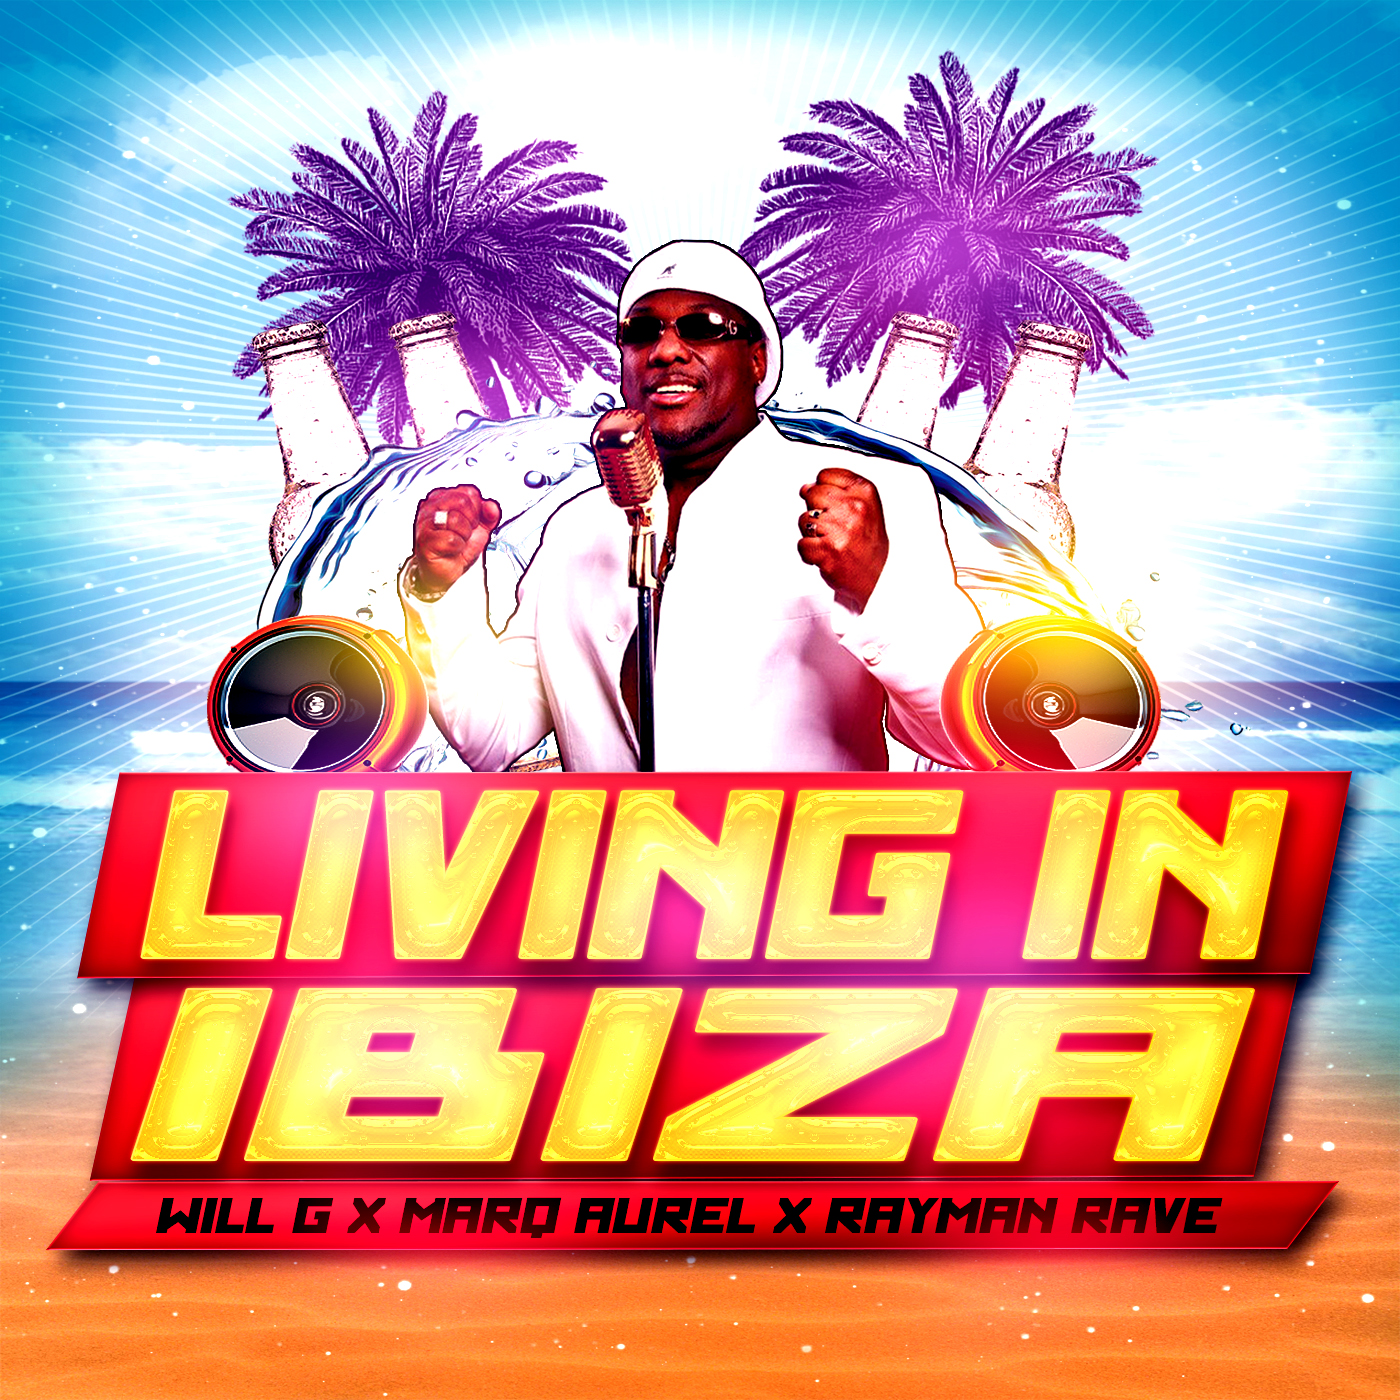 Living-in-Ibiza_Will_G_X_Marq_Aurel_X_Rayman_Rave1400